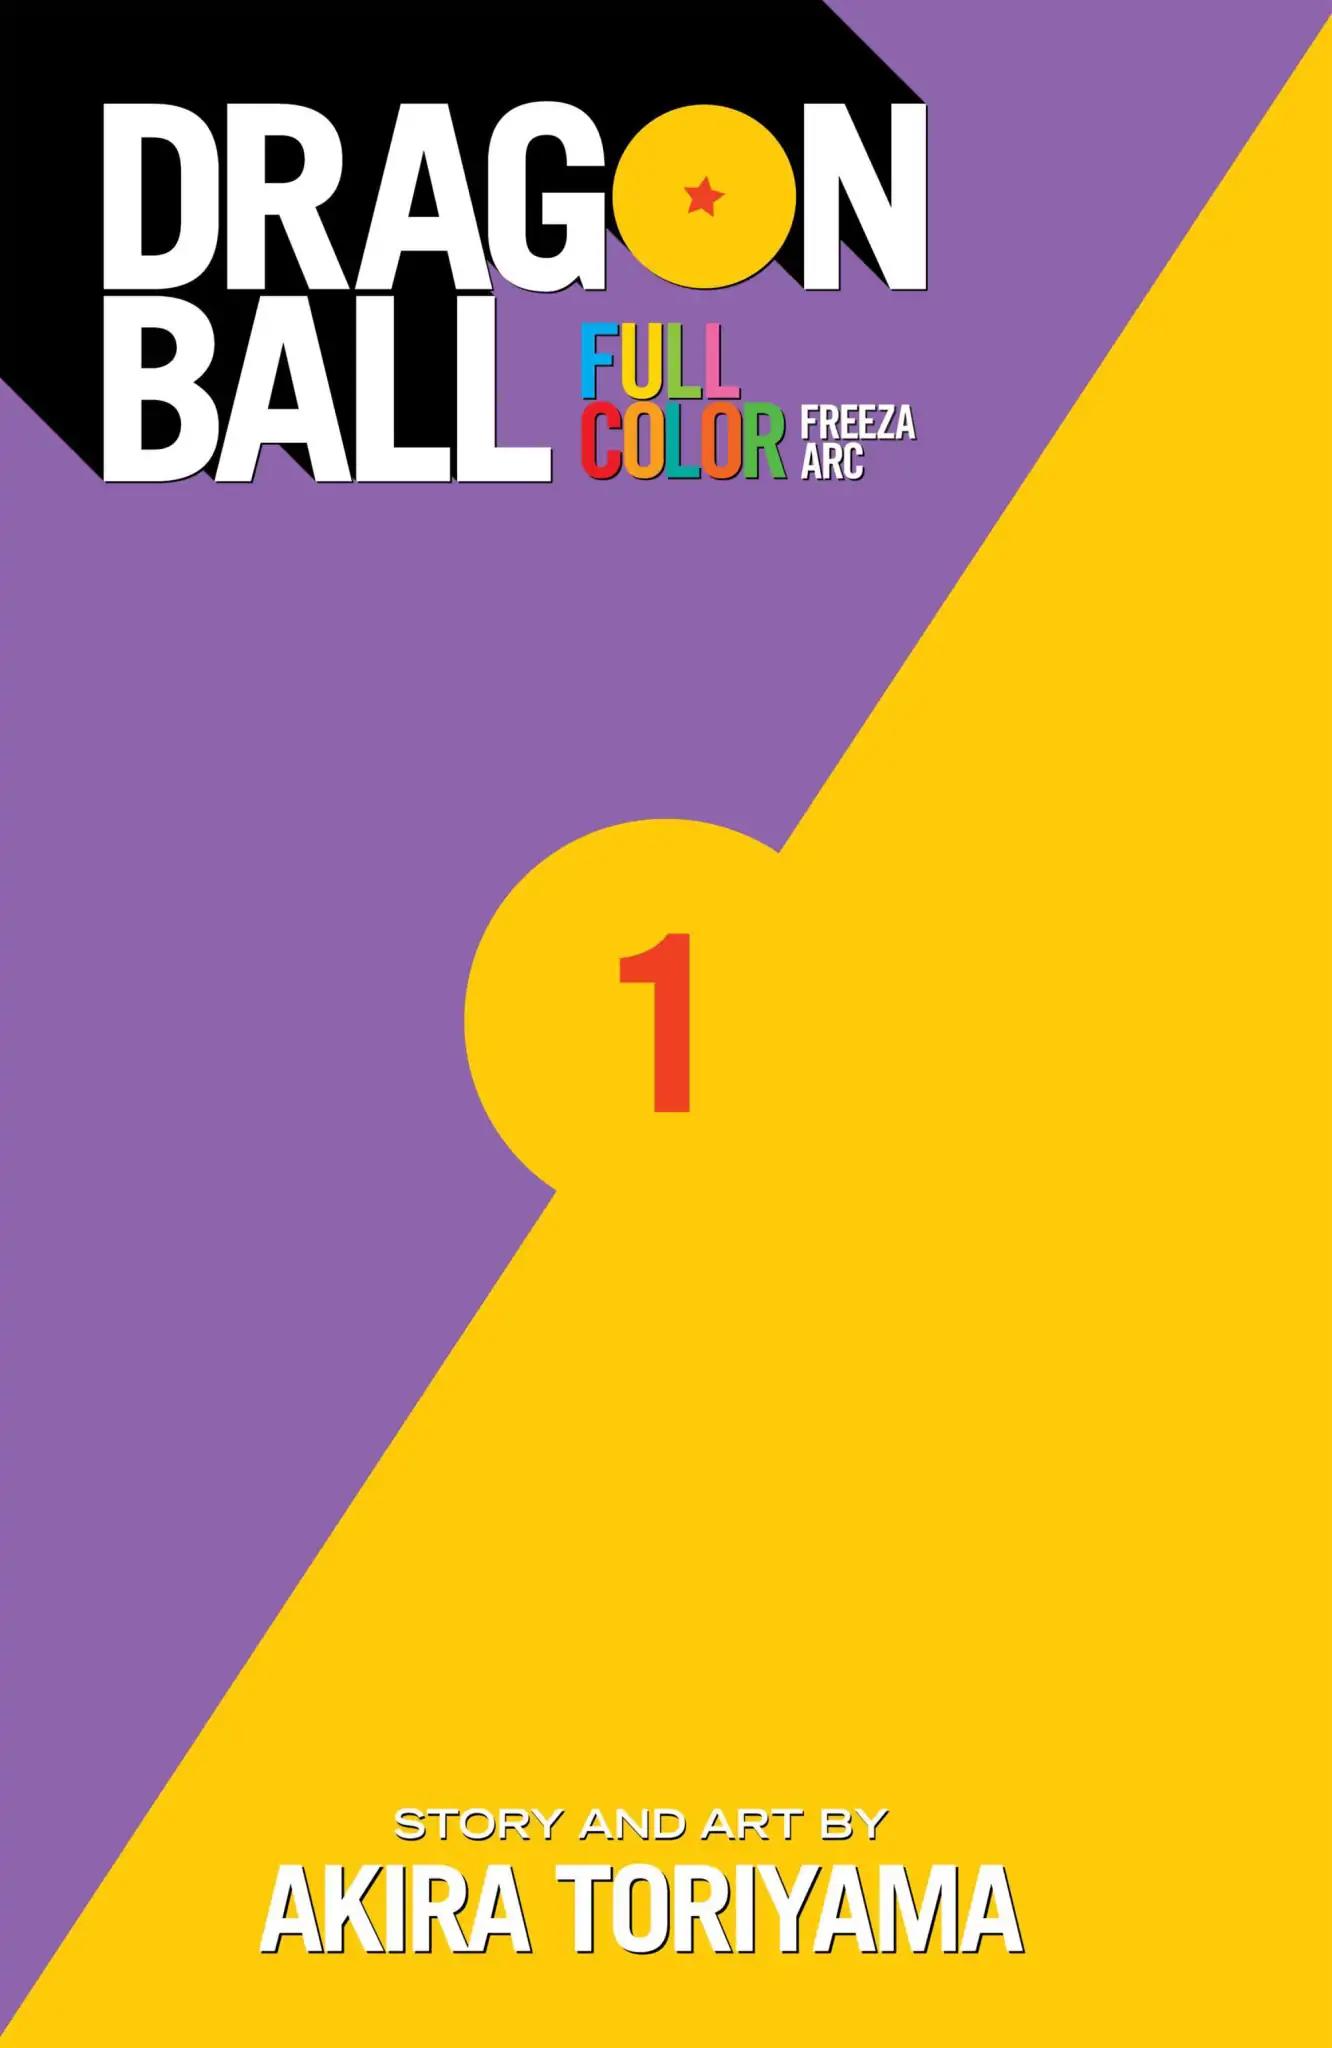 Dragon Ball Full Color Freeza Arc Vol.1 Chapter 001: